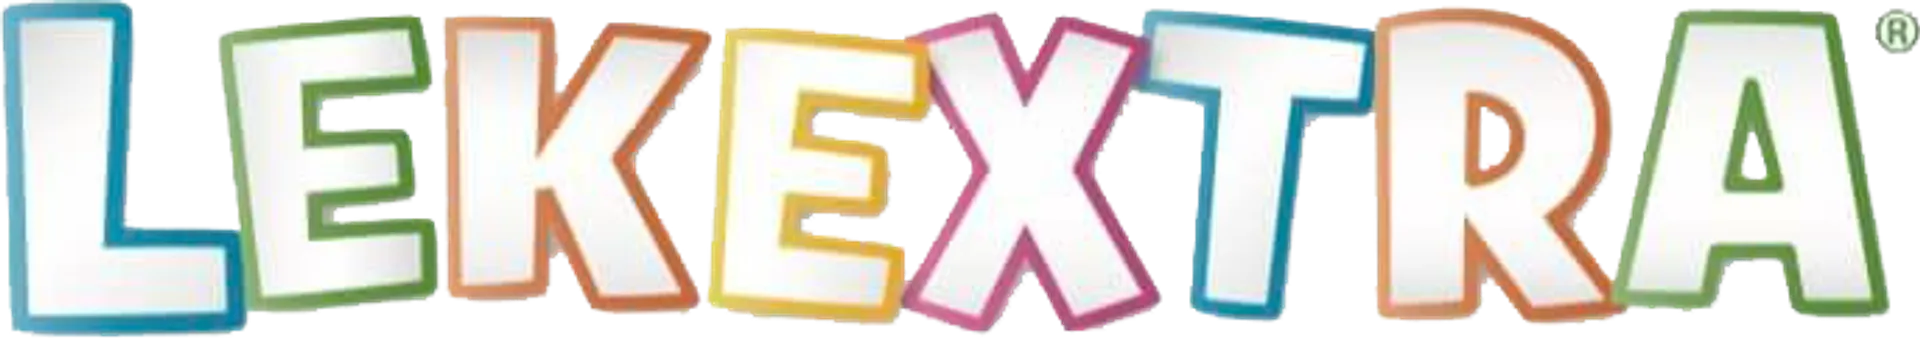 LEKEXTRA logo